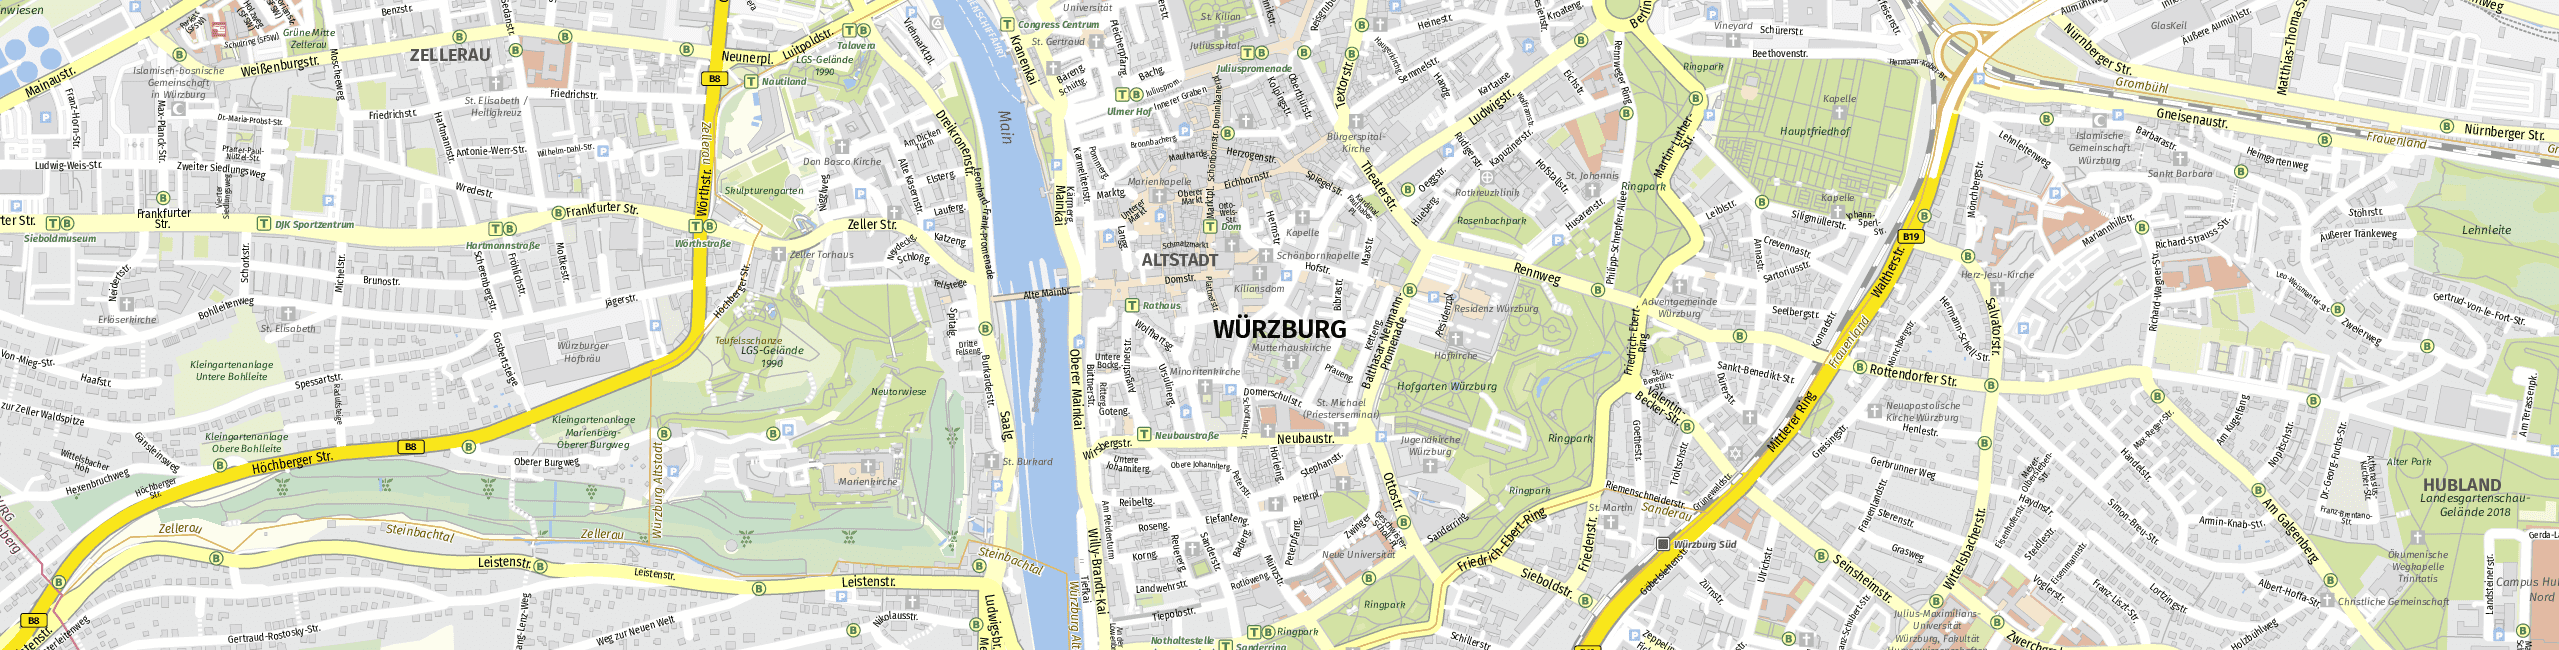 Stadtplan Würzburg zum Downloaden.